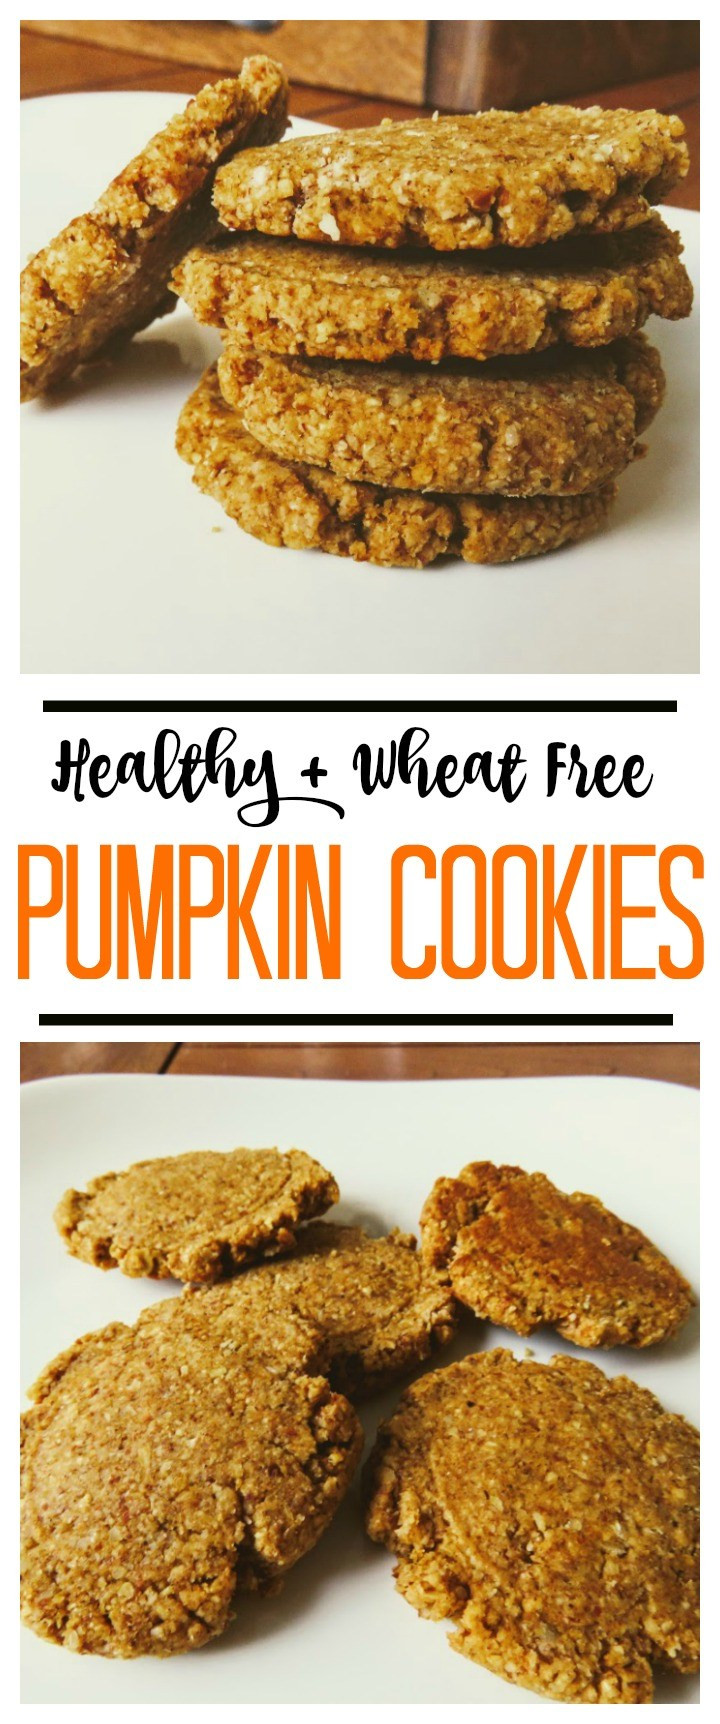 Pumpkin Cookies Healthy
 Healthy Wheat Free Pumpkin Cookies Write Your Story